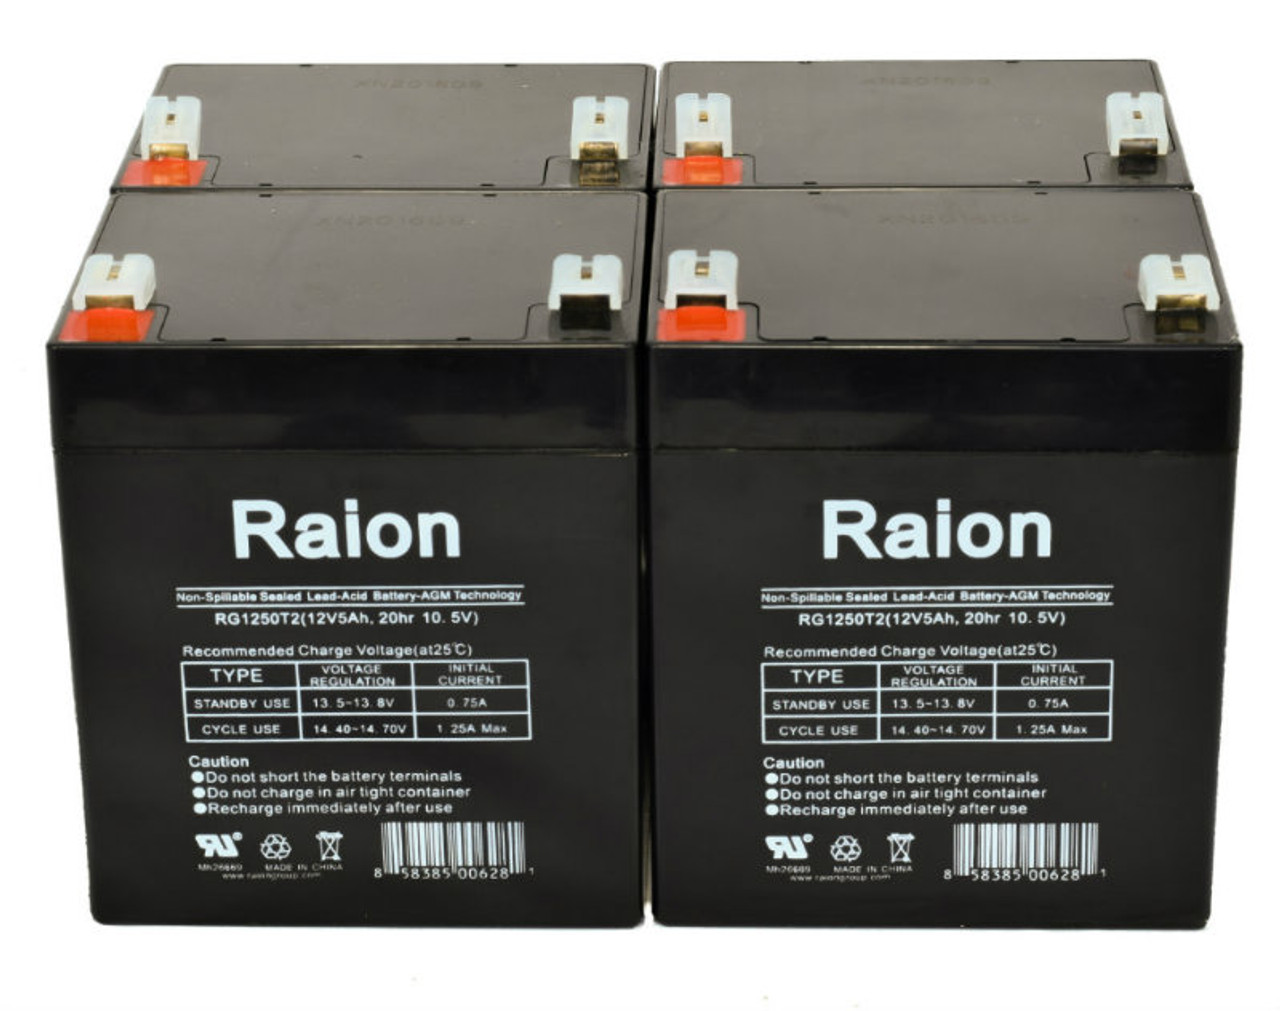 Raion Power 12V 5Ah RG1250T2 Replacement Lead Acid Battery for Magnavolt SLA12-5.4 - 4 Pack